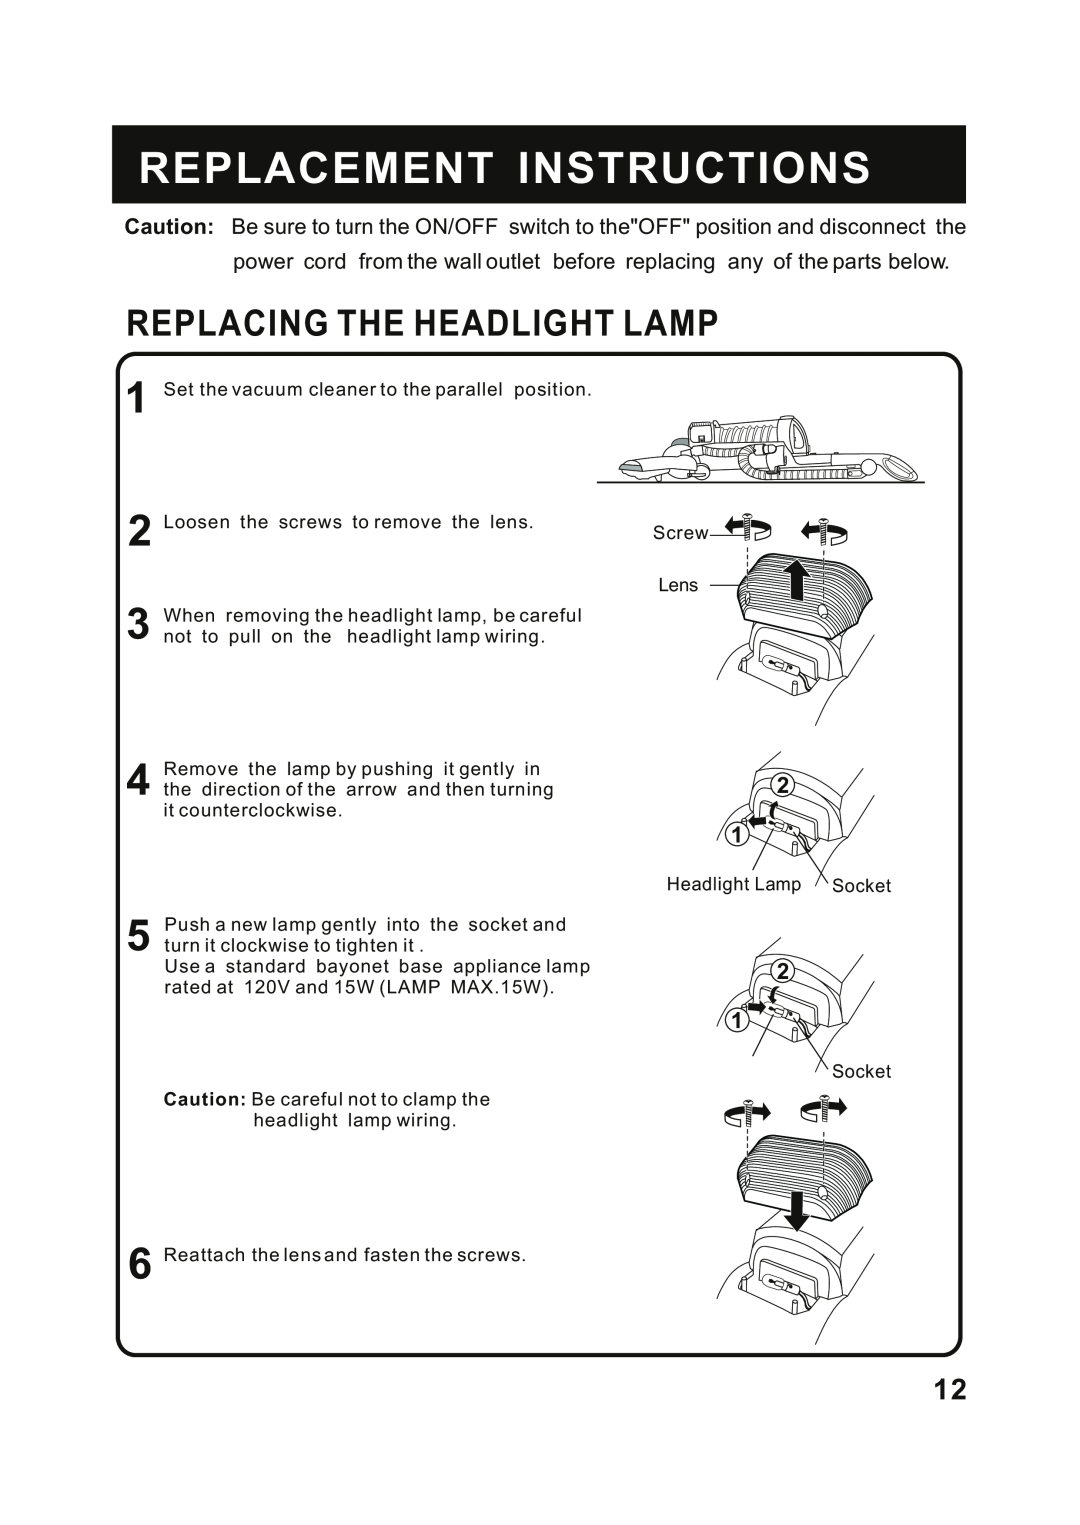 Fantom Vacuum FM741HR instruction manual Replacement Instructions, Replacing The Headlight Lamp 